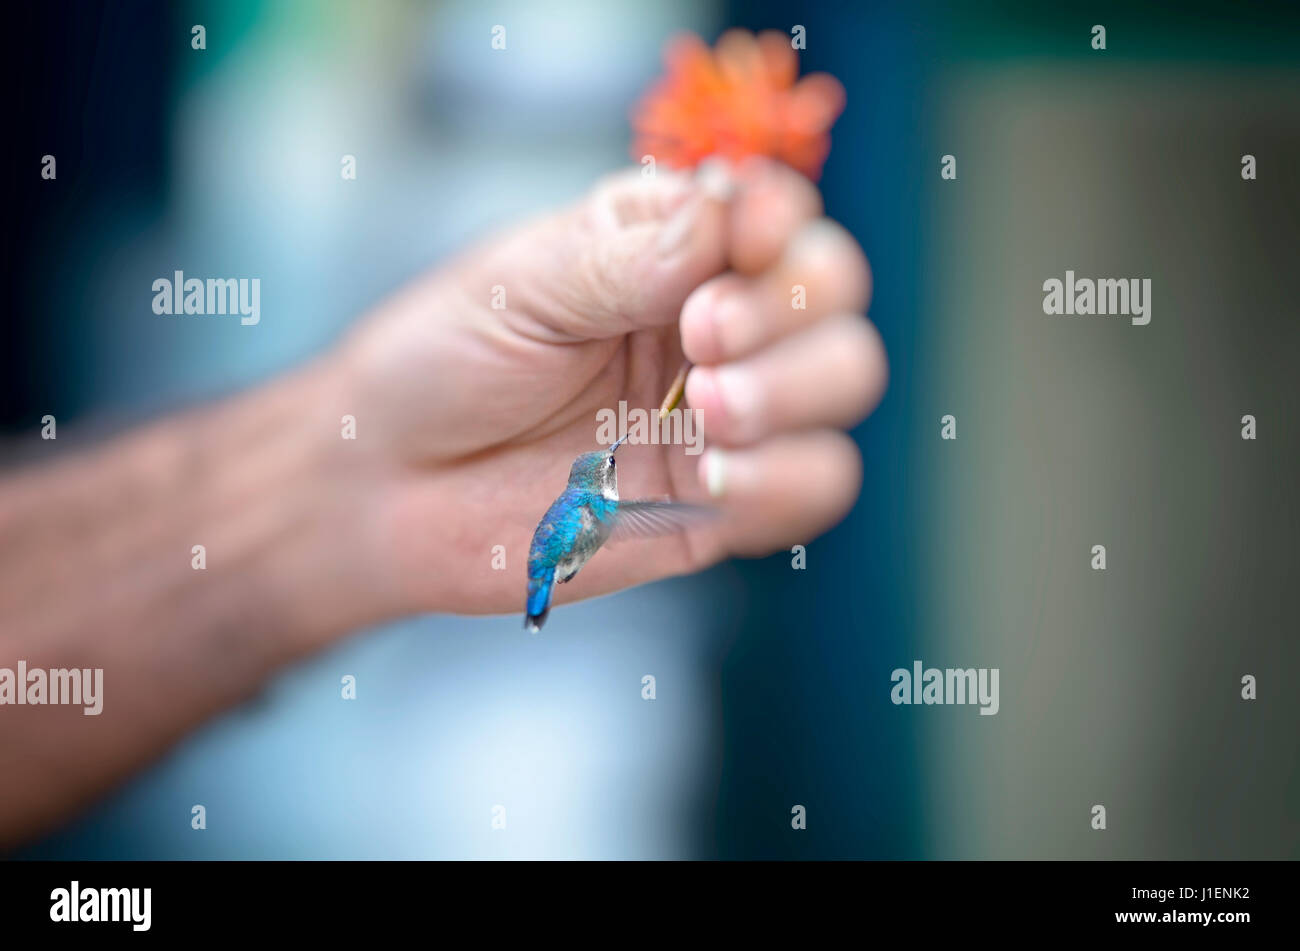 A bee hummingbird, Mellisuga helenae, hovers near a person's hand holding a flower. Stock Photo